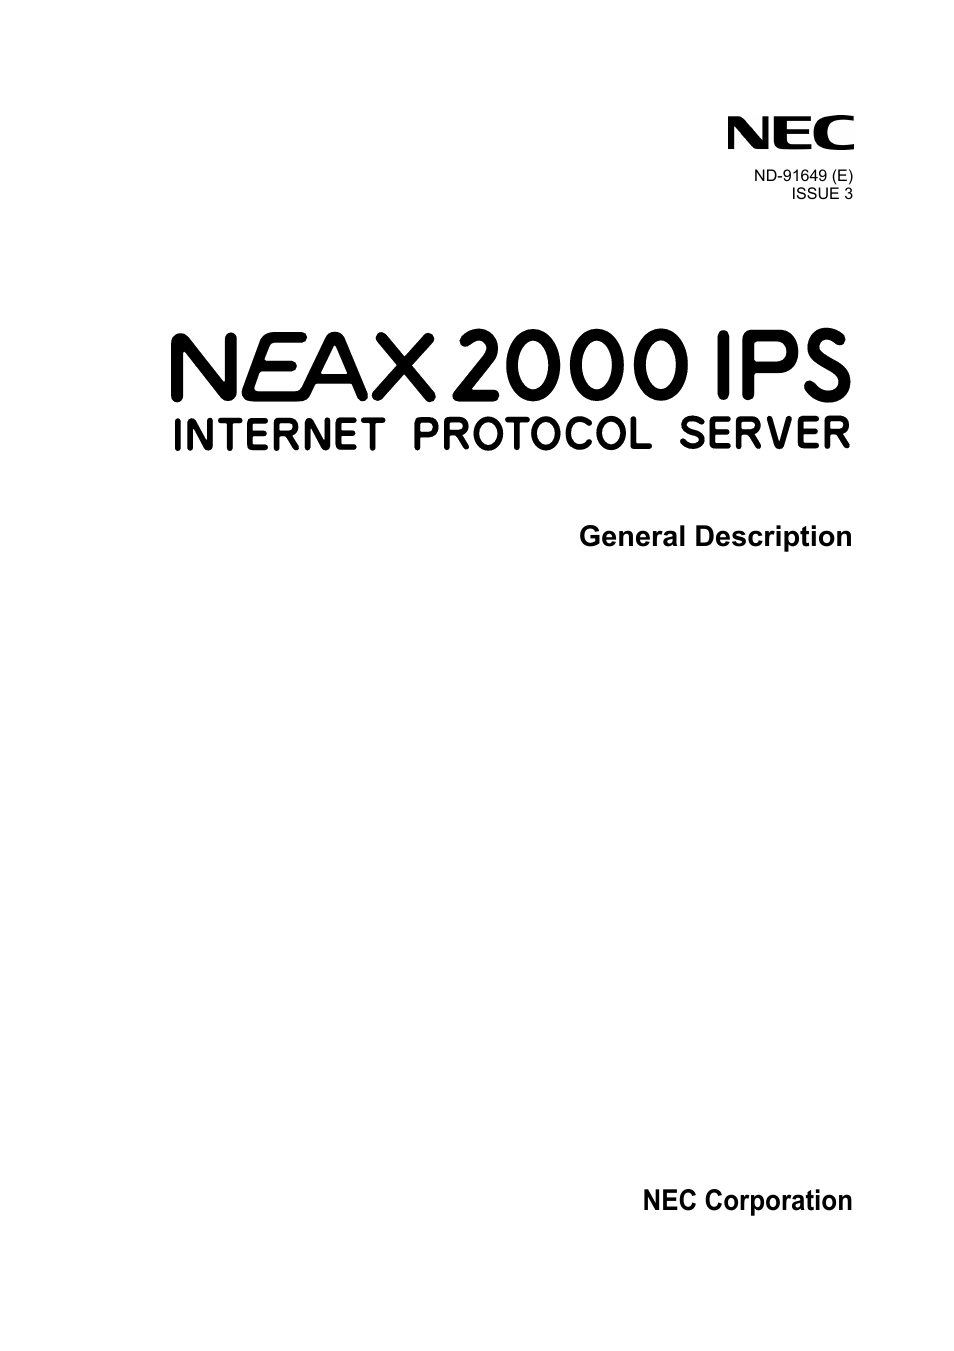 NEAX2000 ND-91649